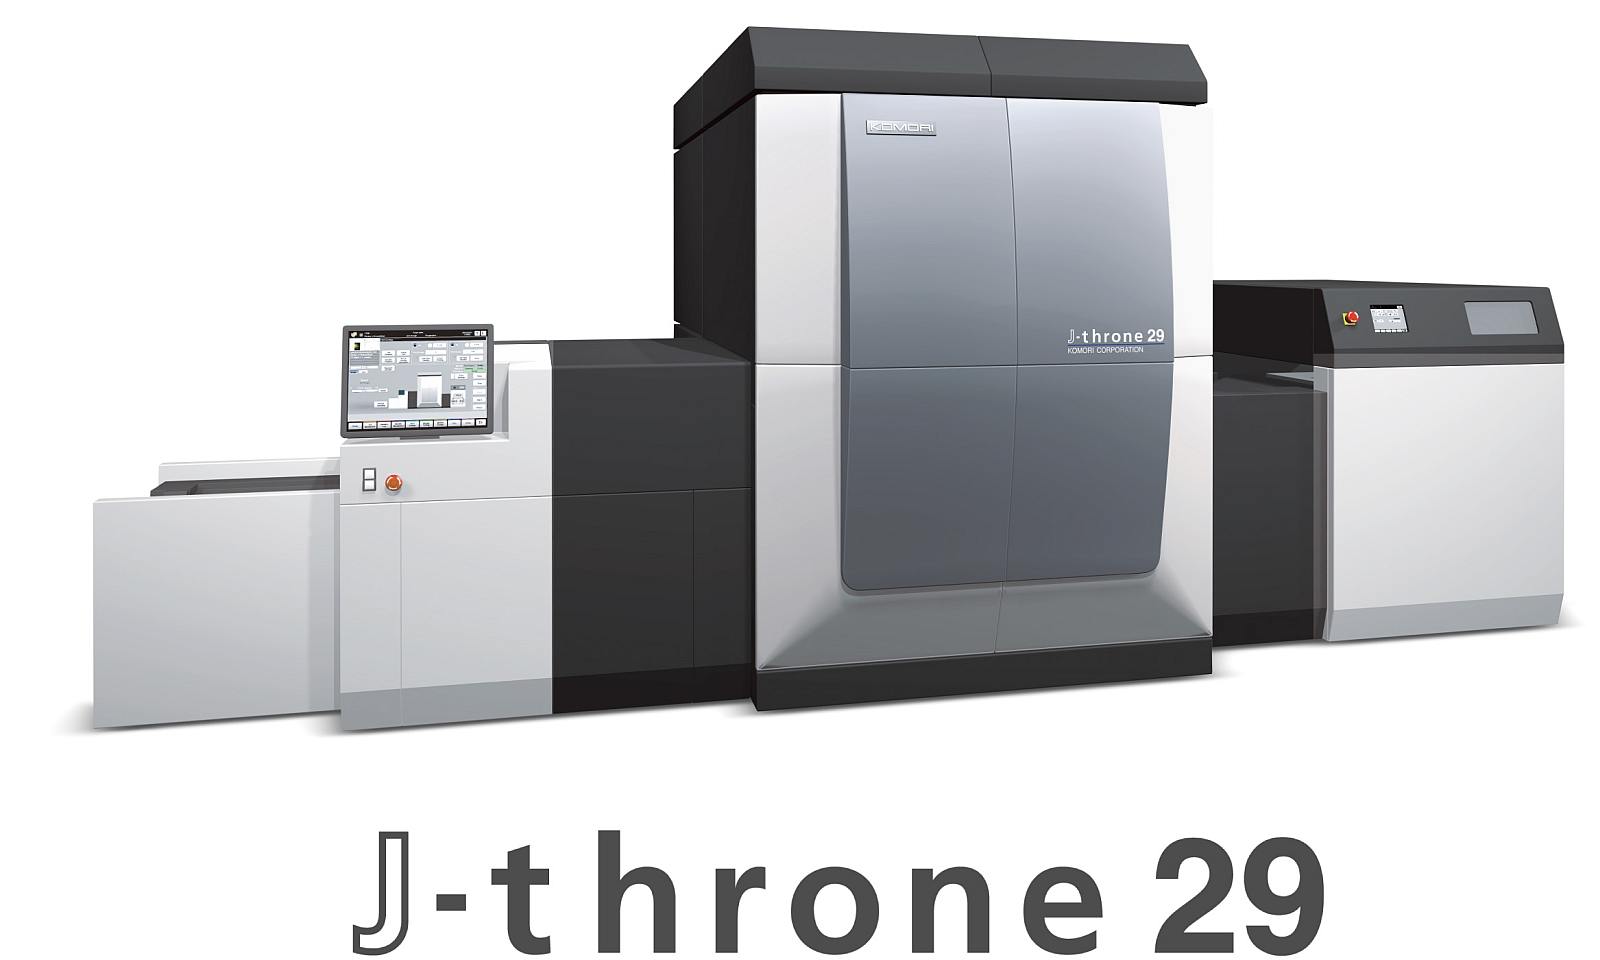 J-throne 29